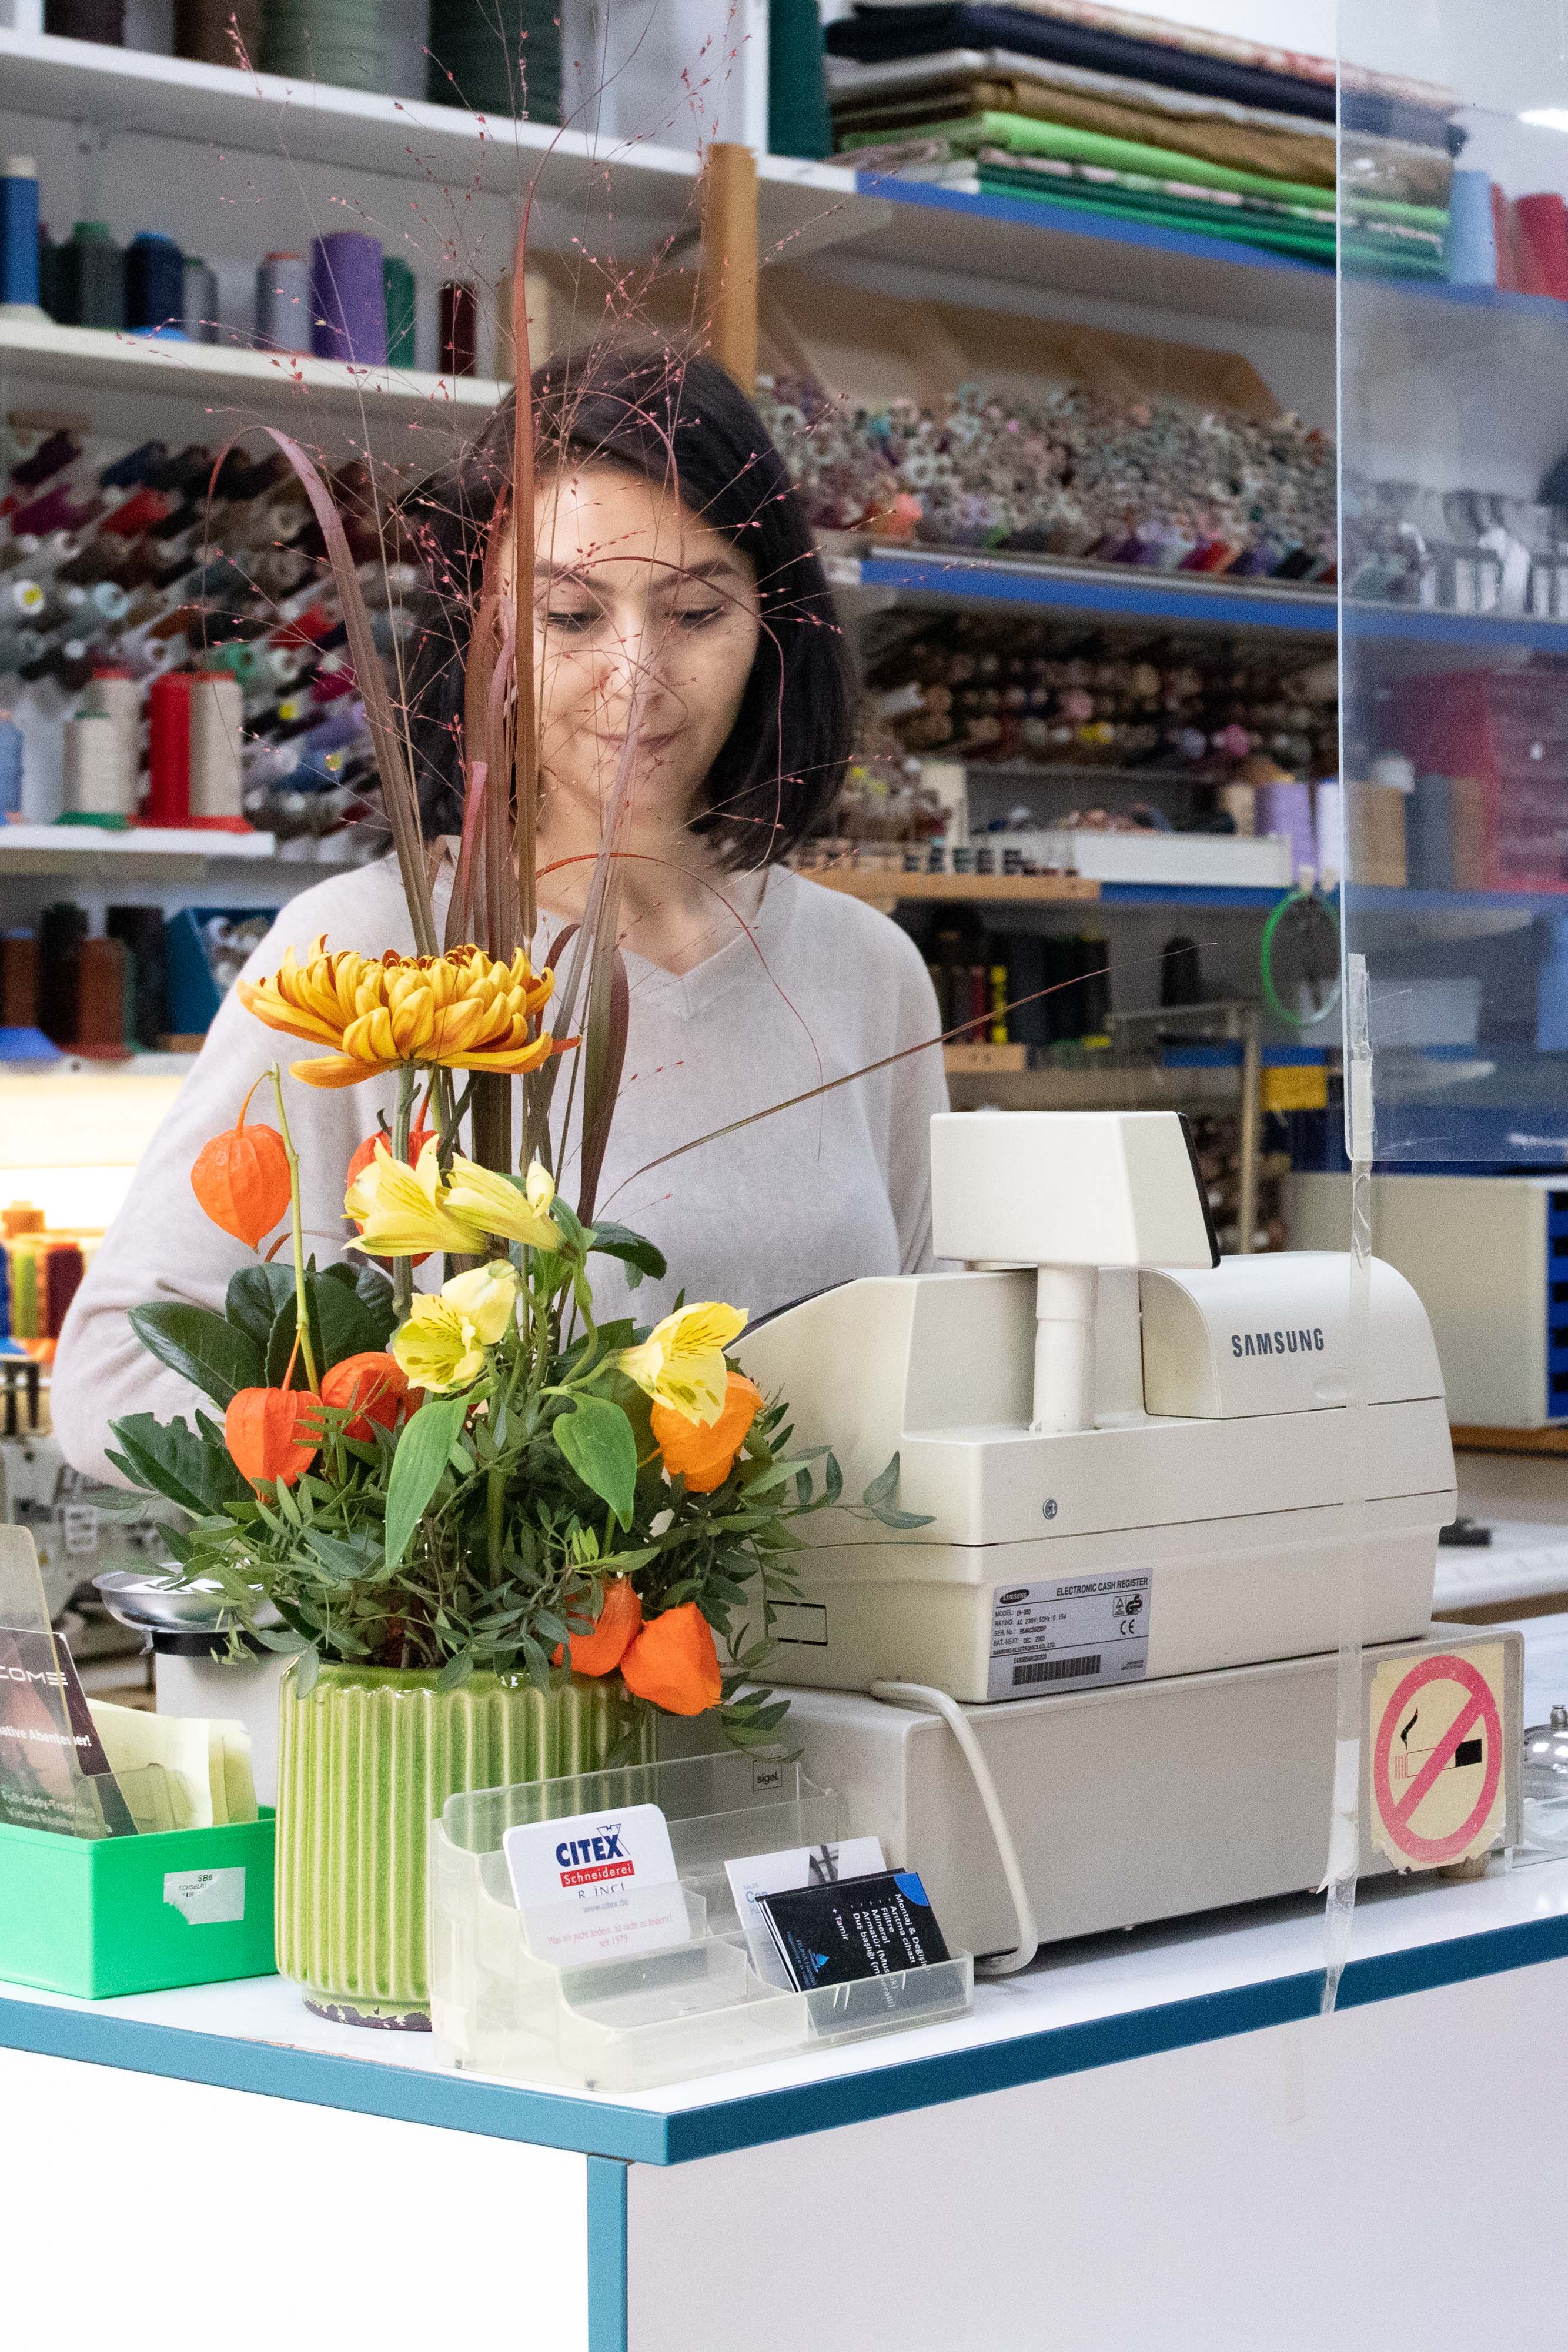 A woman behind a cash register of a tailor's shop